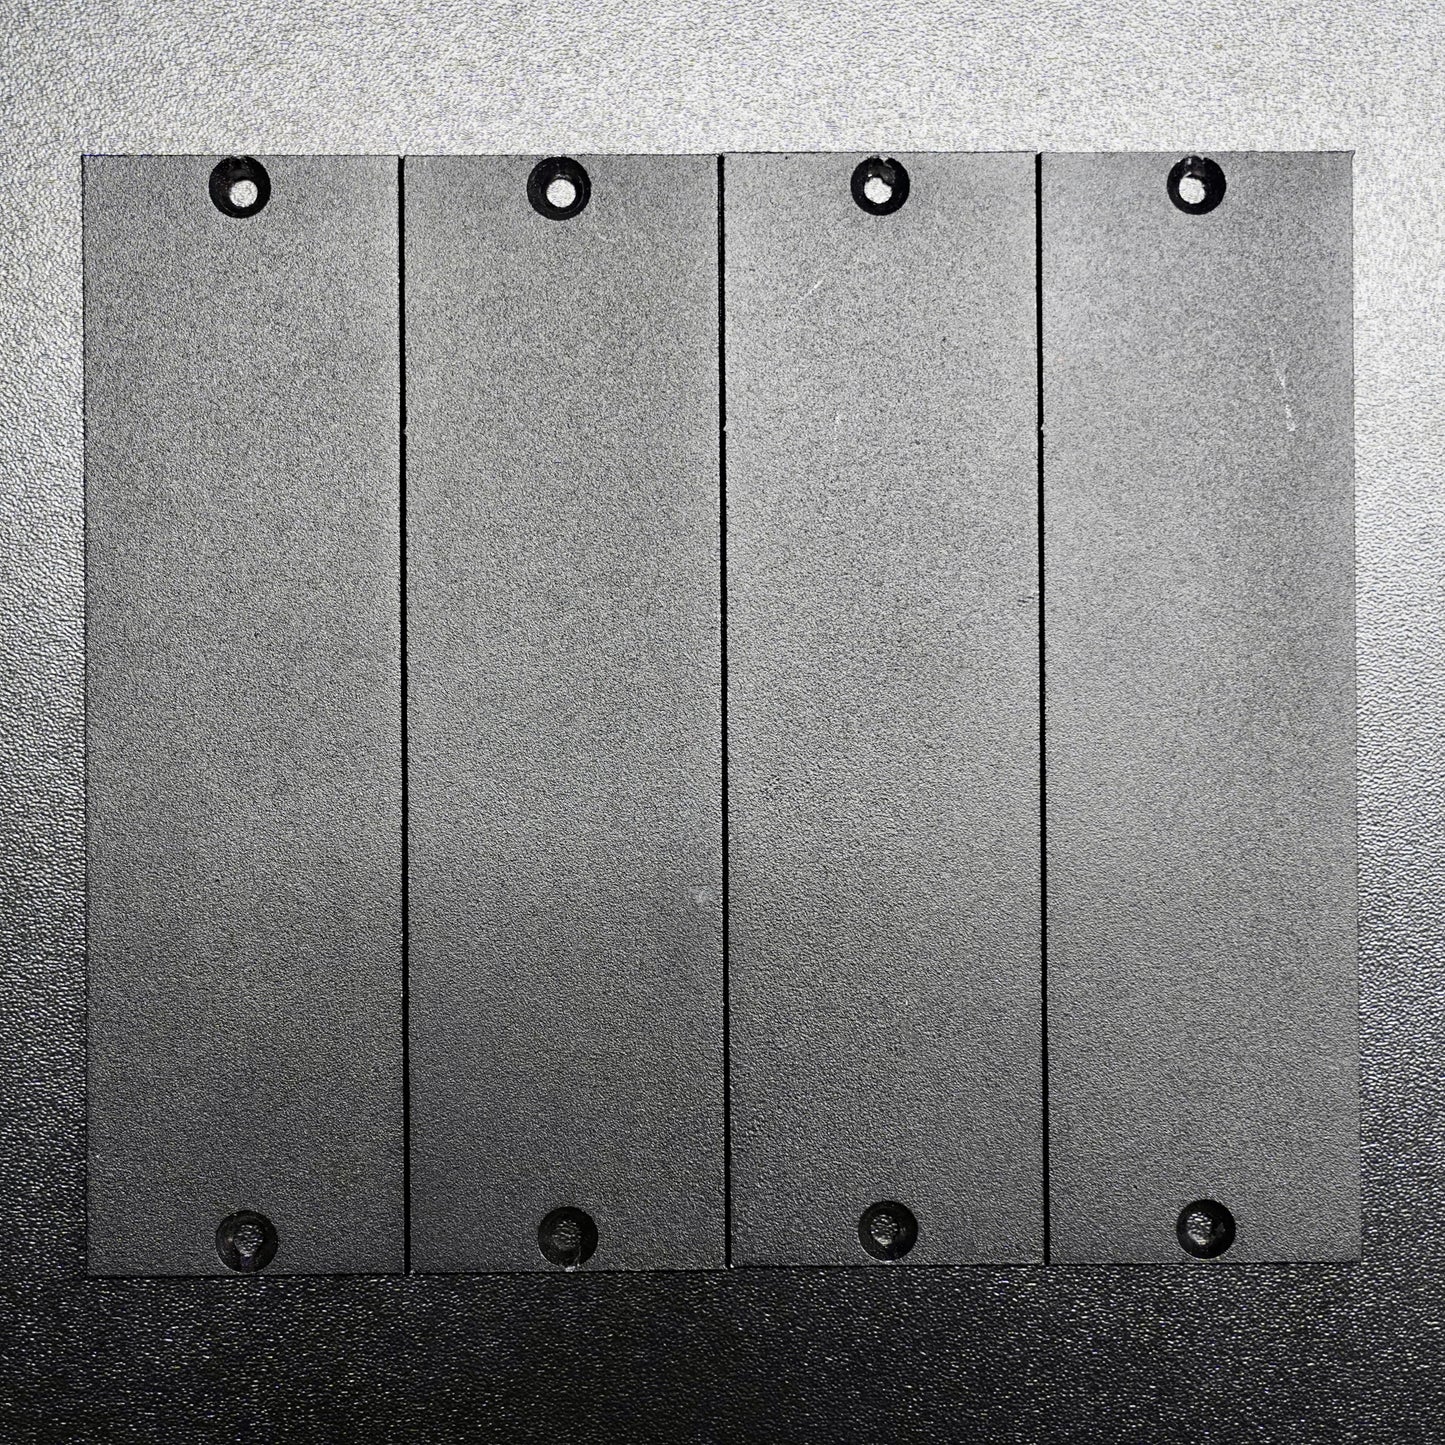 4x 500 Series Blanking Panel